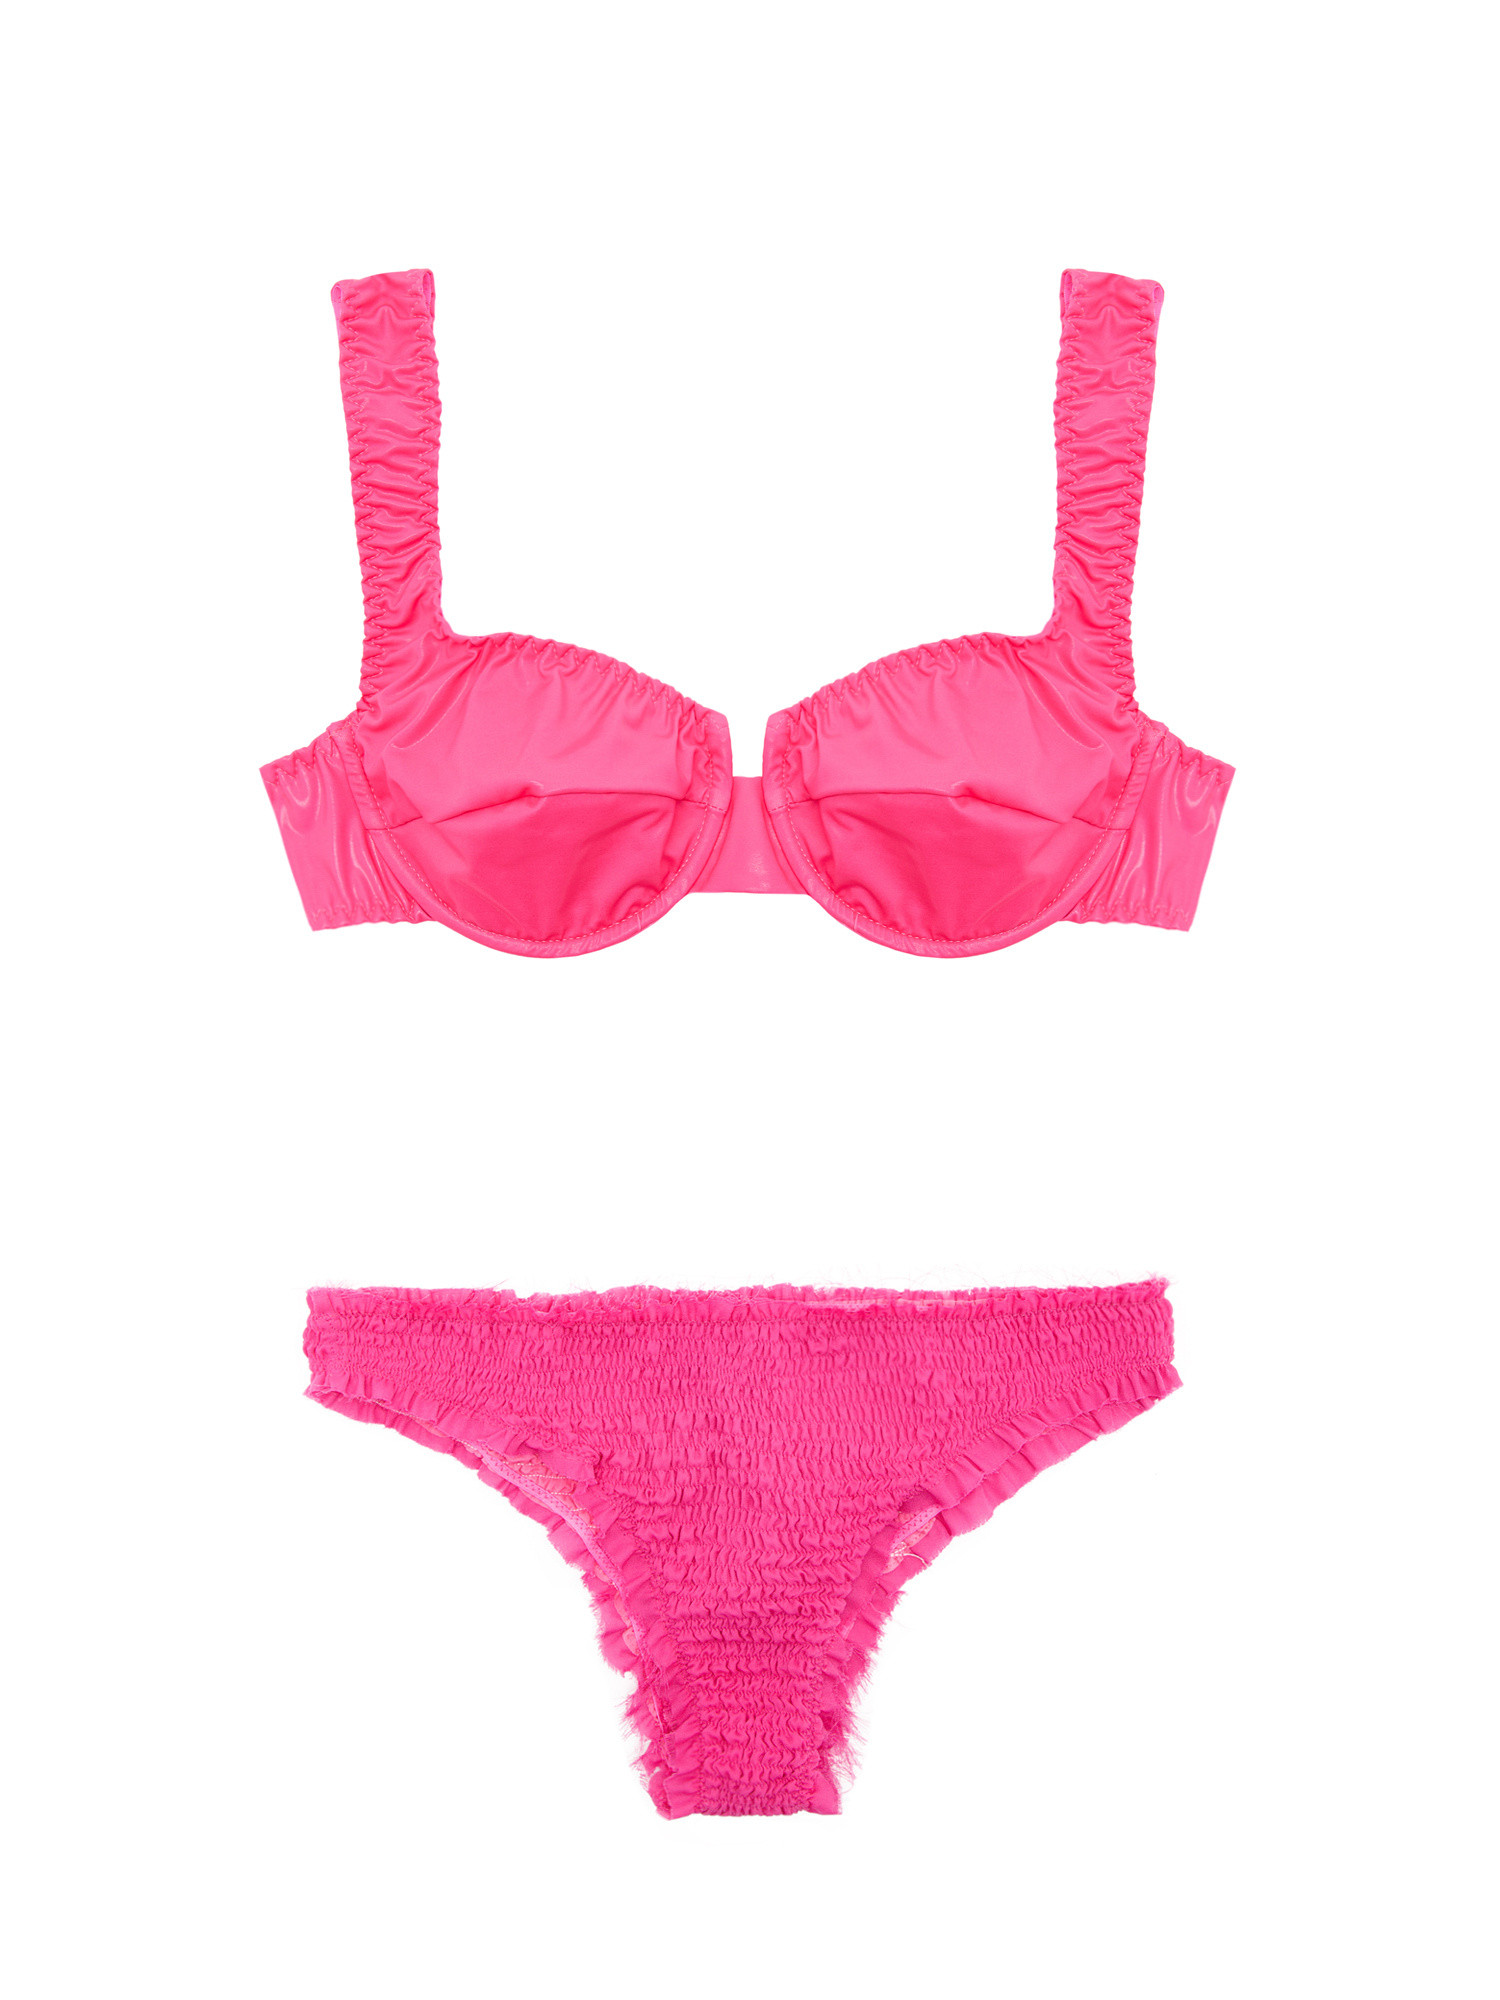 F**K - Bikini with underwire and Brazilian bottom, Pink Fuchsia, large image number 0